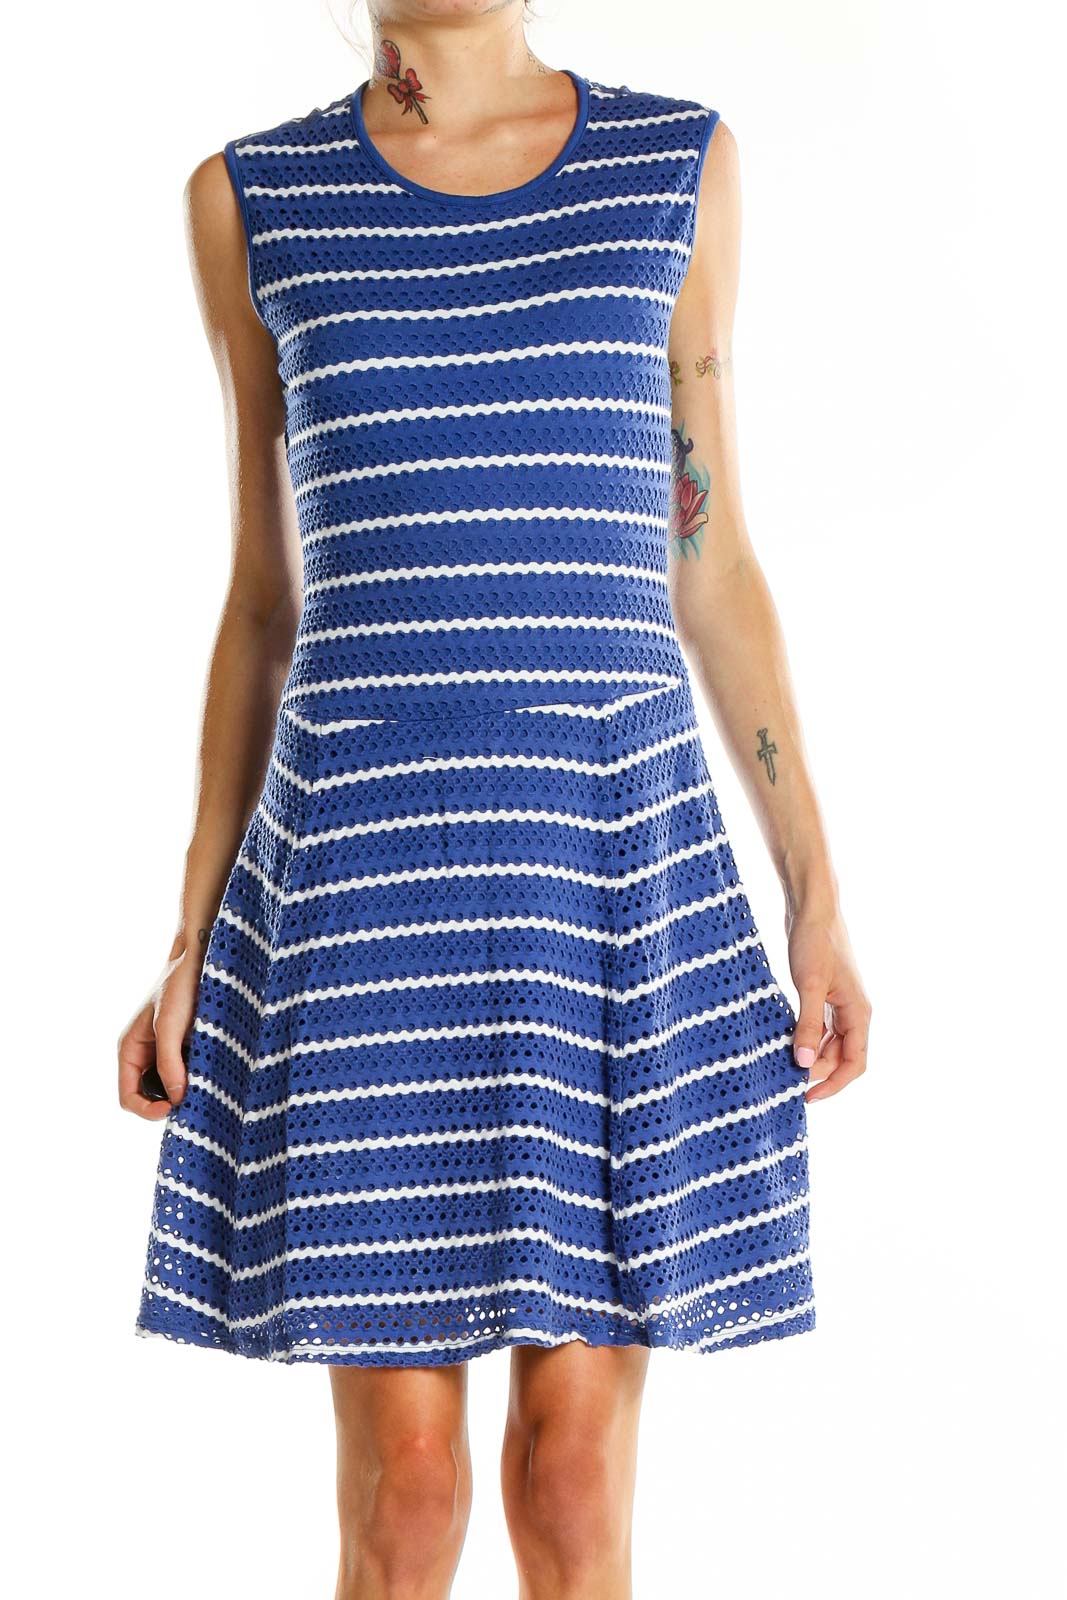 Blue White Sleeveless Striped Dress Front